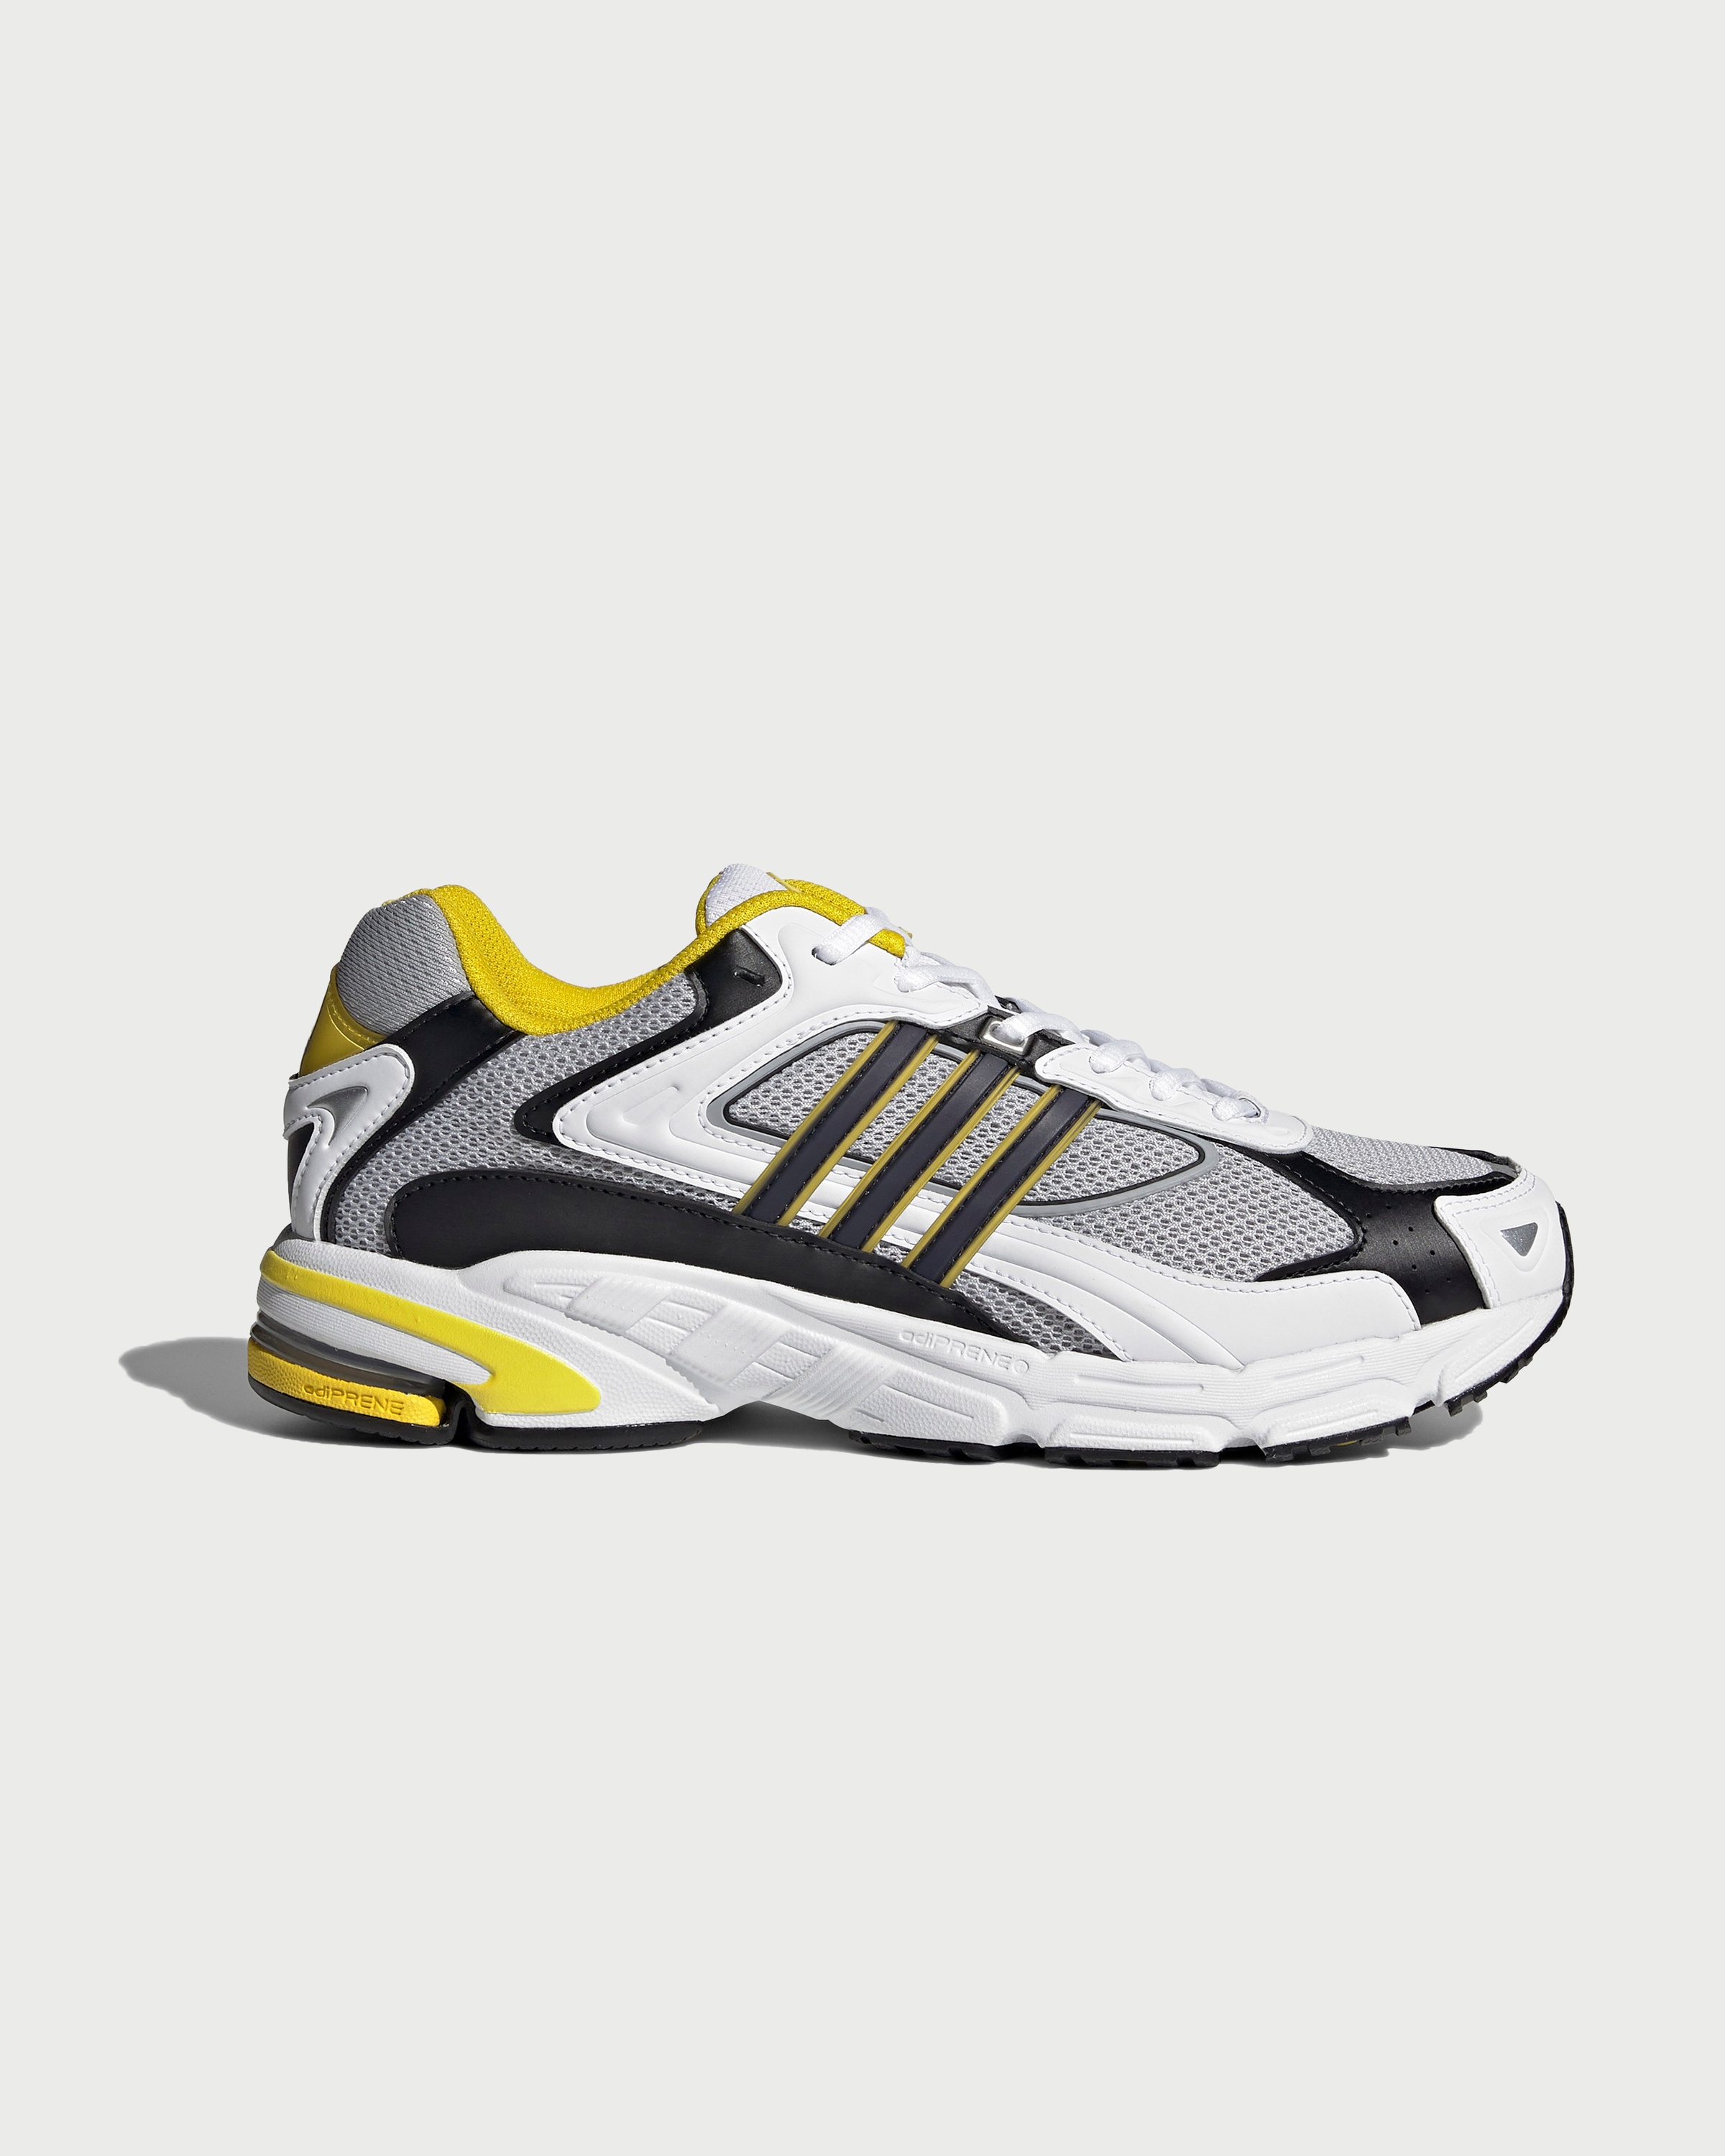 Adidas – Response CL White/Yellow - Low Top Sneakers - White - Image 1